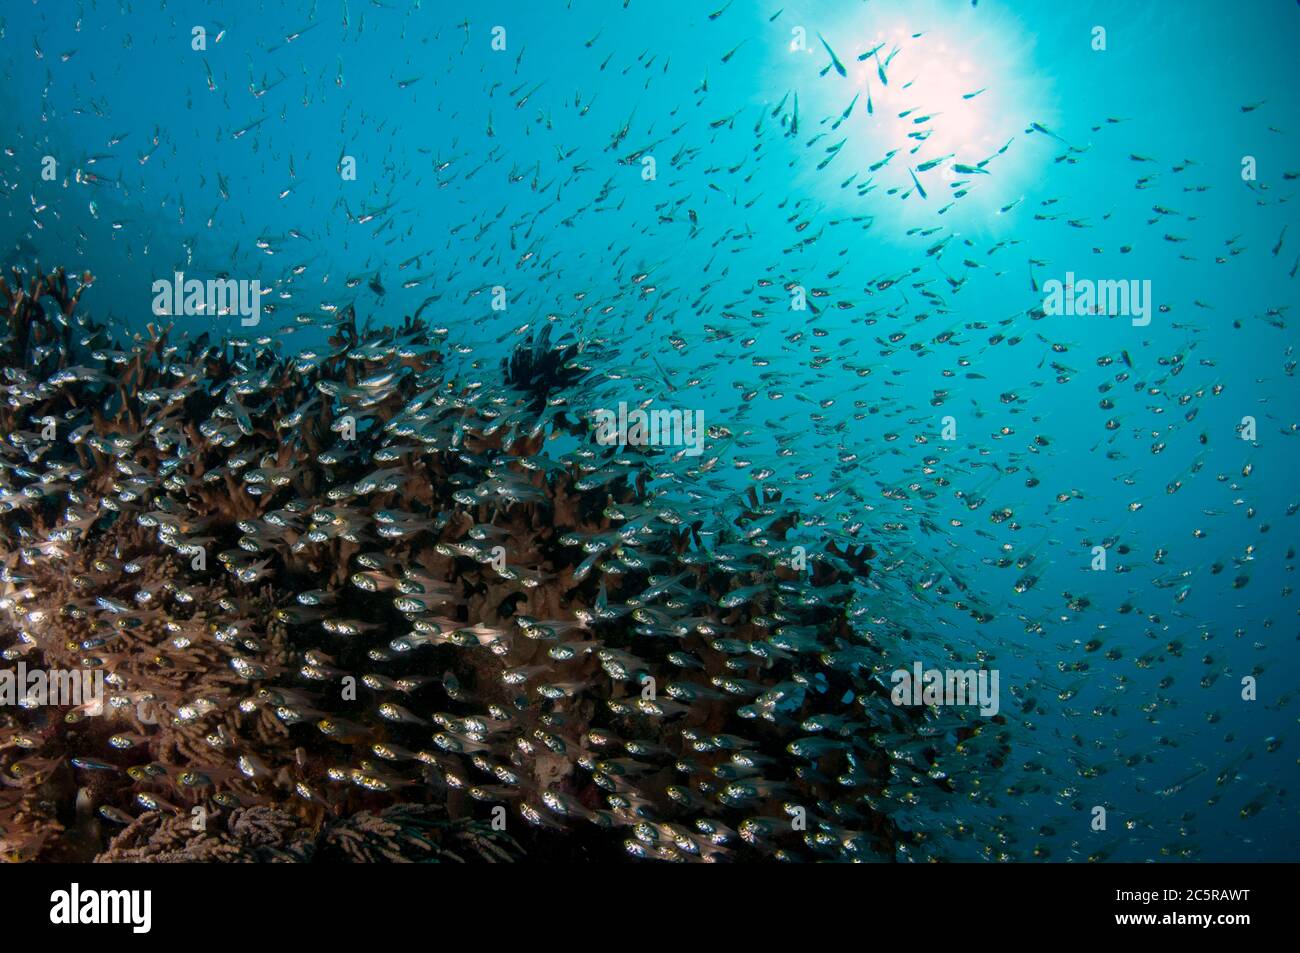 School of small fish with sun in background, Cape Kri dive site, Dampier Strait, Raja Ampat, Indonesia Stock Photo